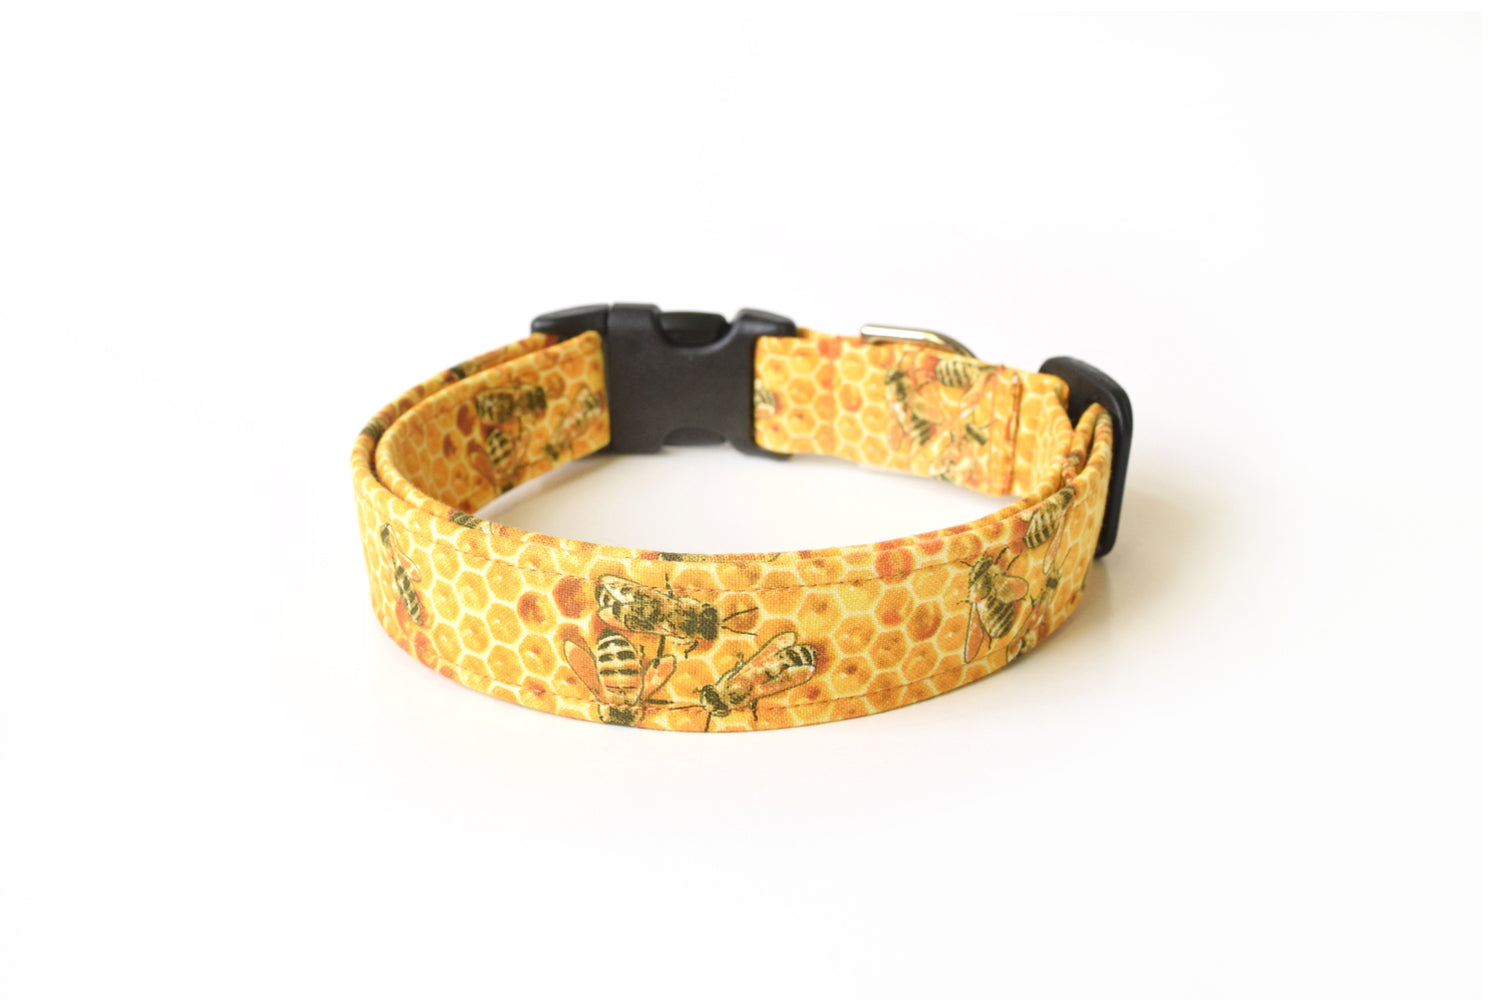 Golden Yellow Honeycomb Bees Dog Collar - Handmade by Kira's Pet Shop